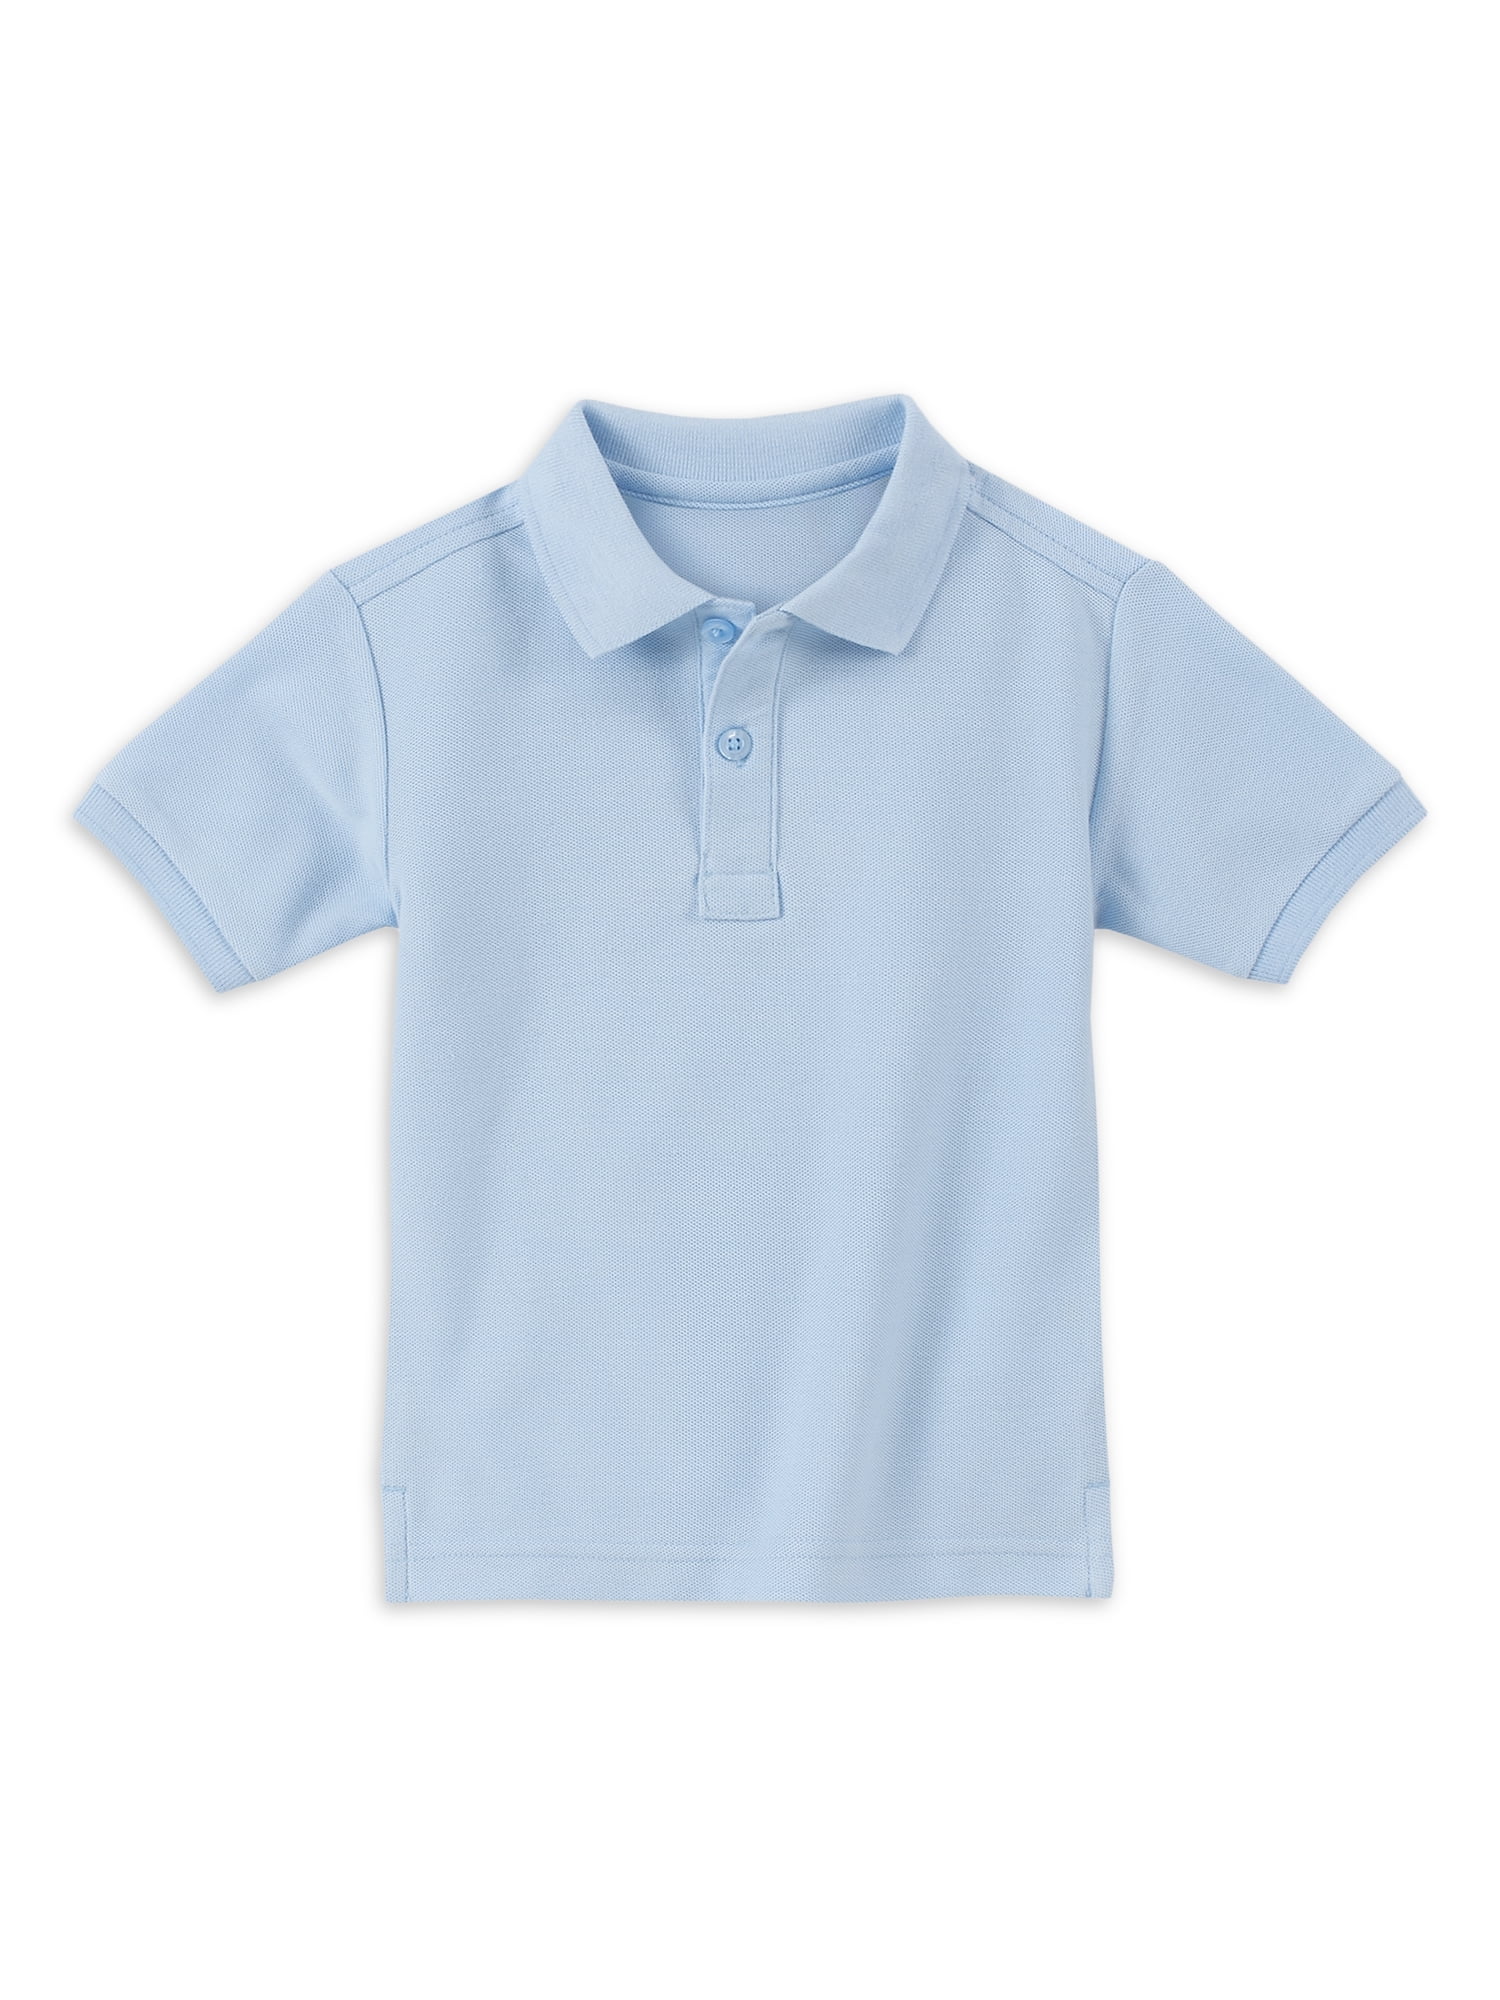 CHAPS Boys School Uniform Short Sleeve Double Pique Polo Shirt With ...